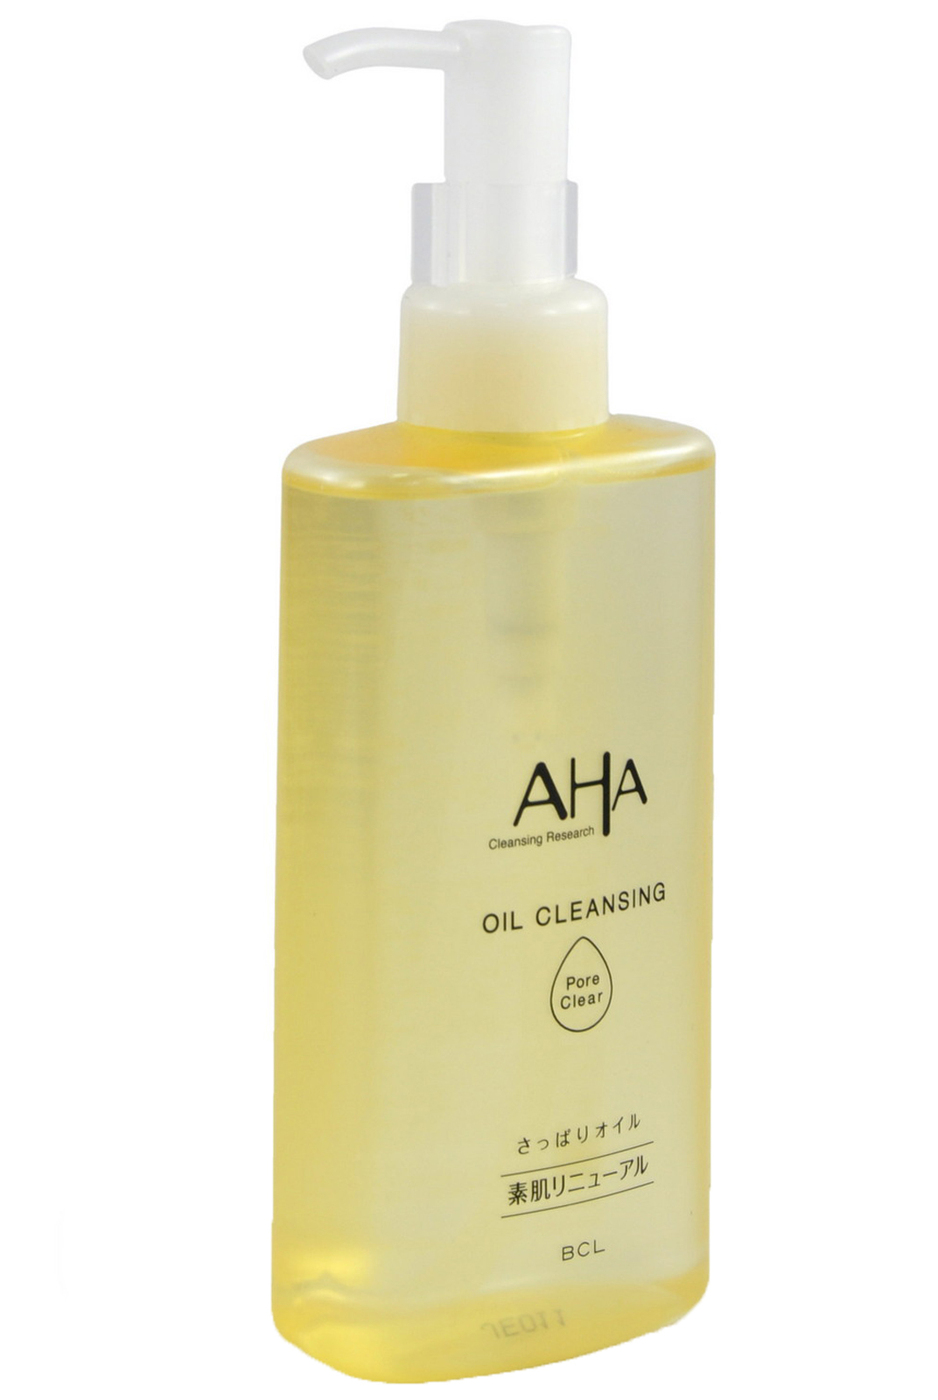 Aha Cleansing Oil. Anua Cleansing Oil. Aha очищающее масло для снятия макияжа. Купить очищающее масло